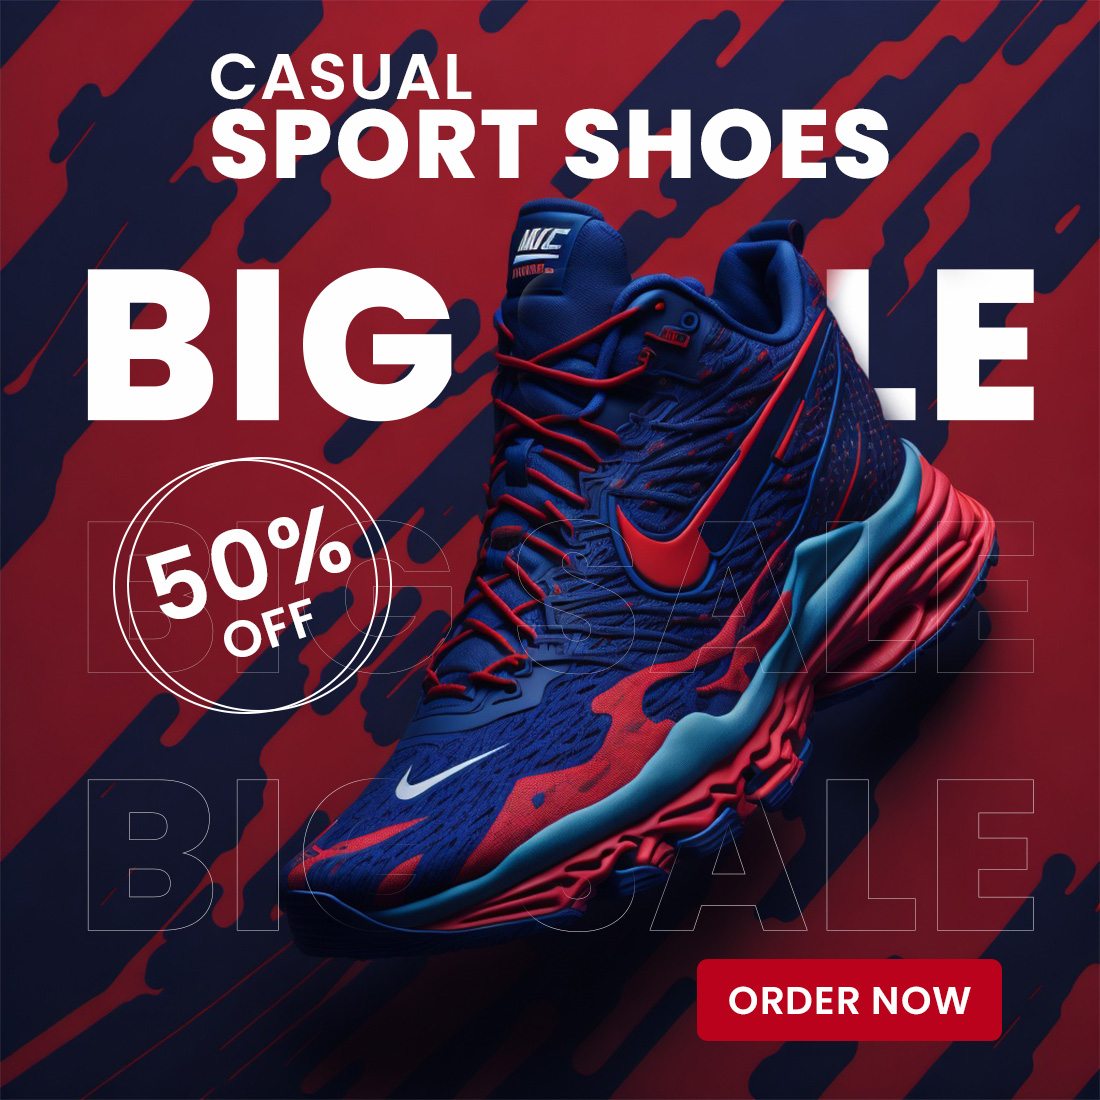 big sale shoes social media post cover image.